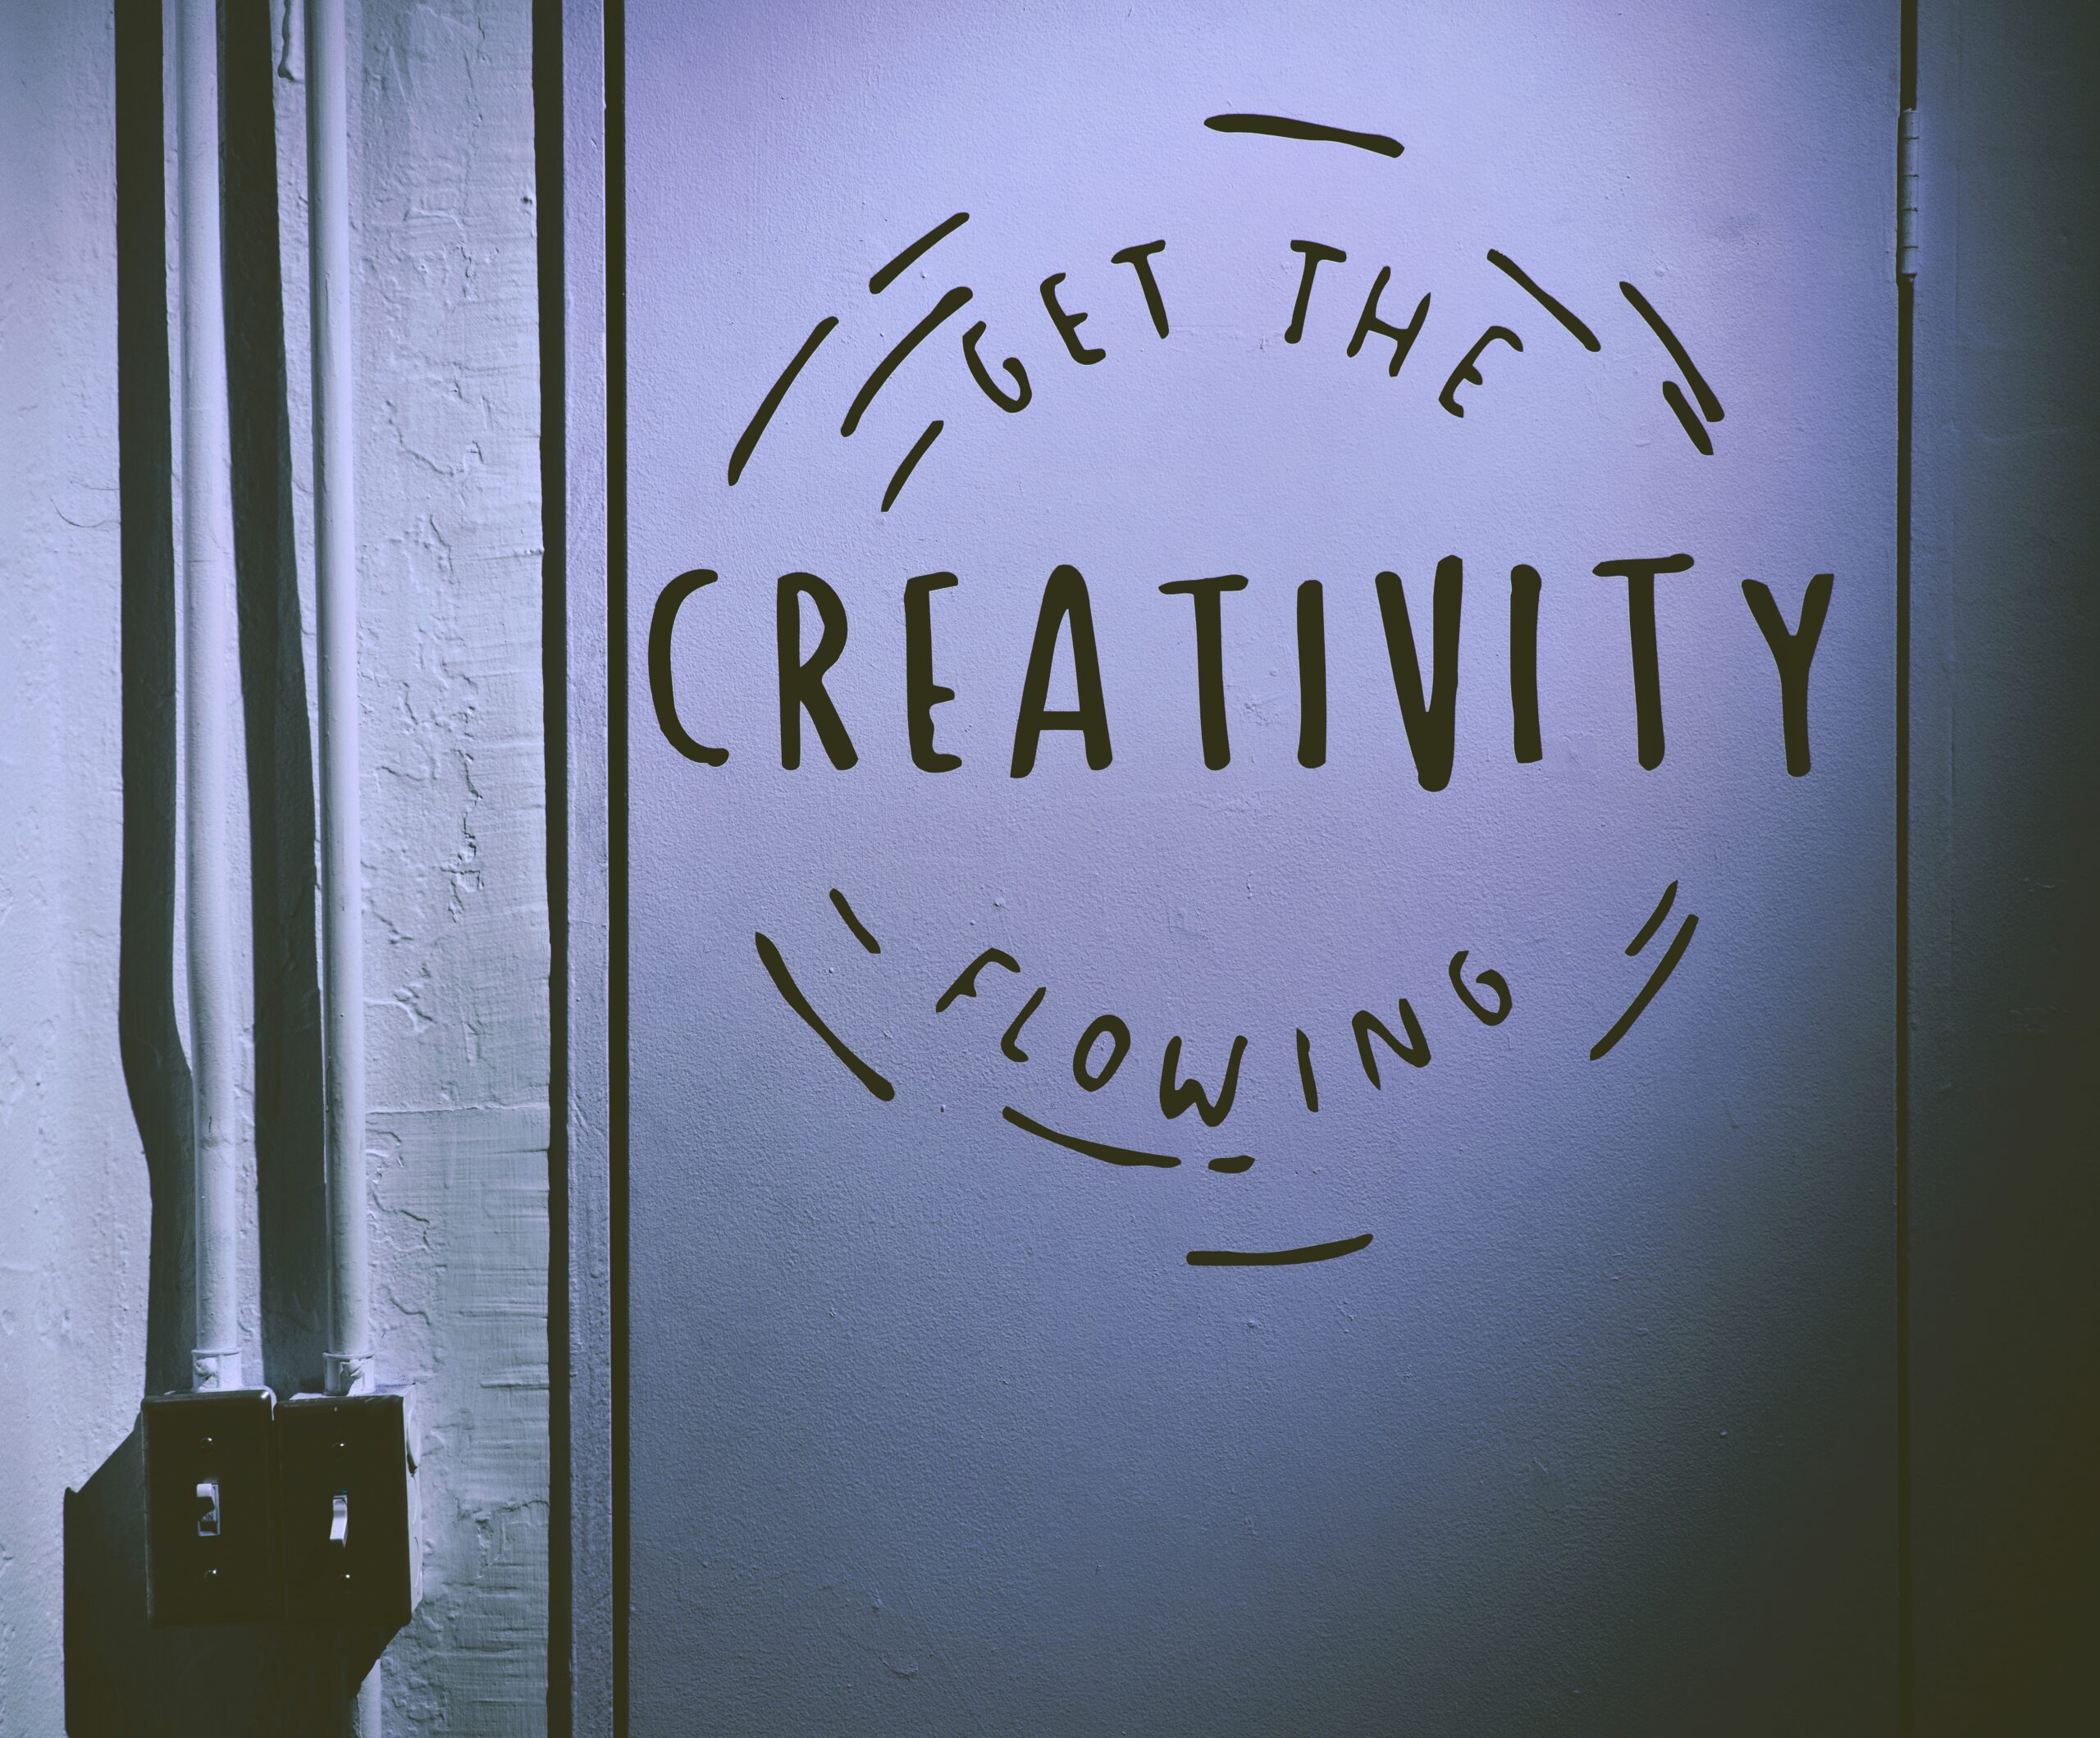 creativity good for mental health